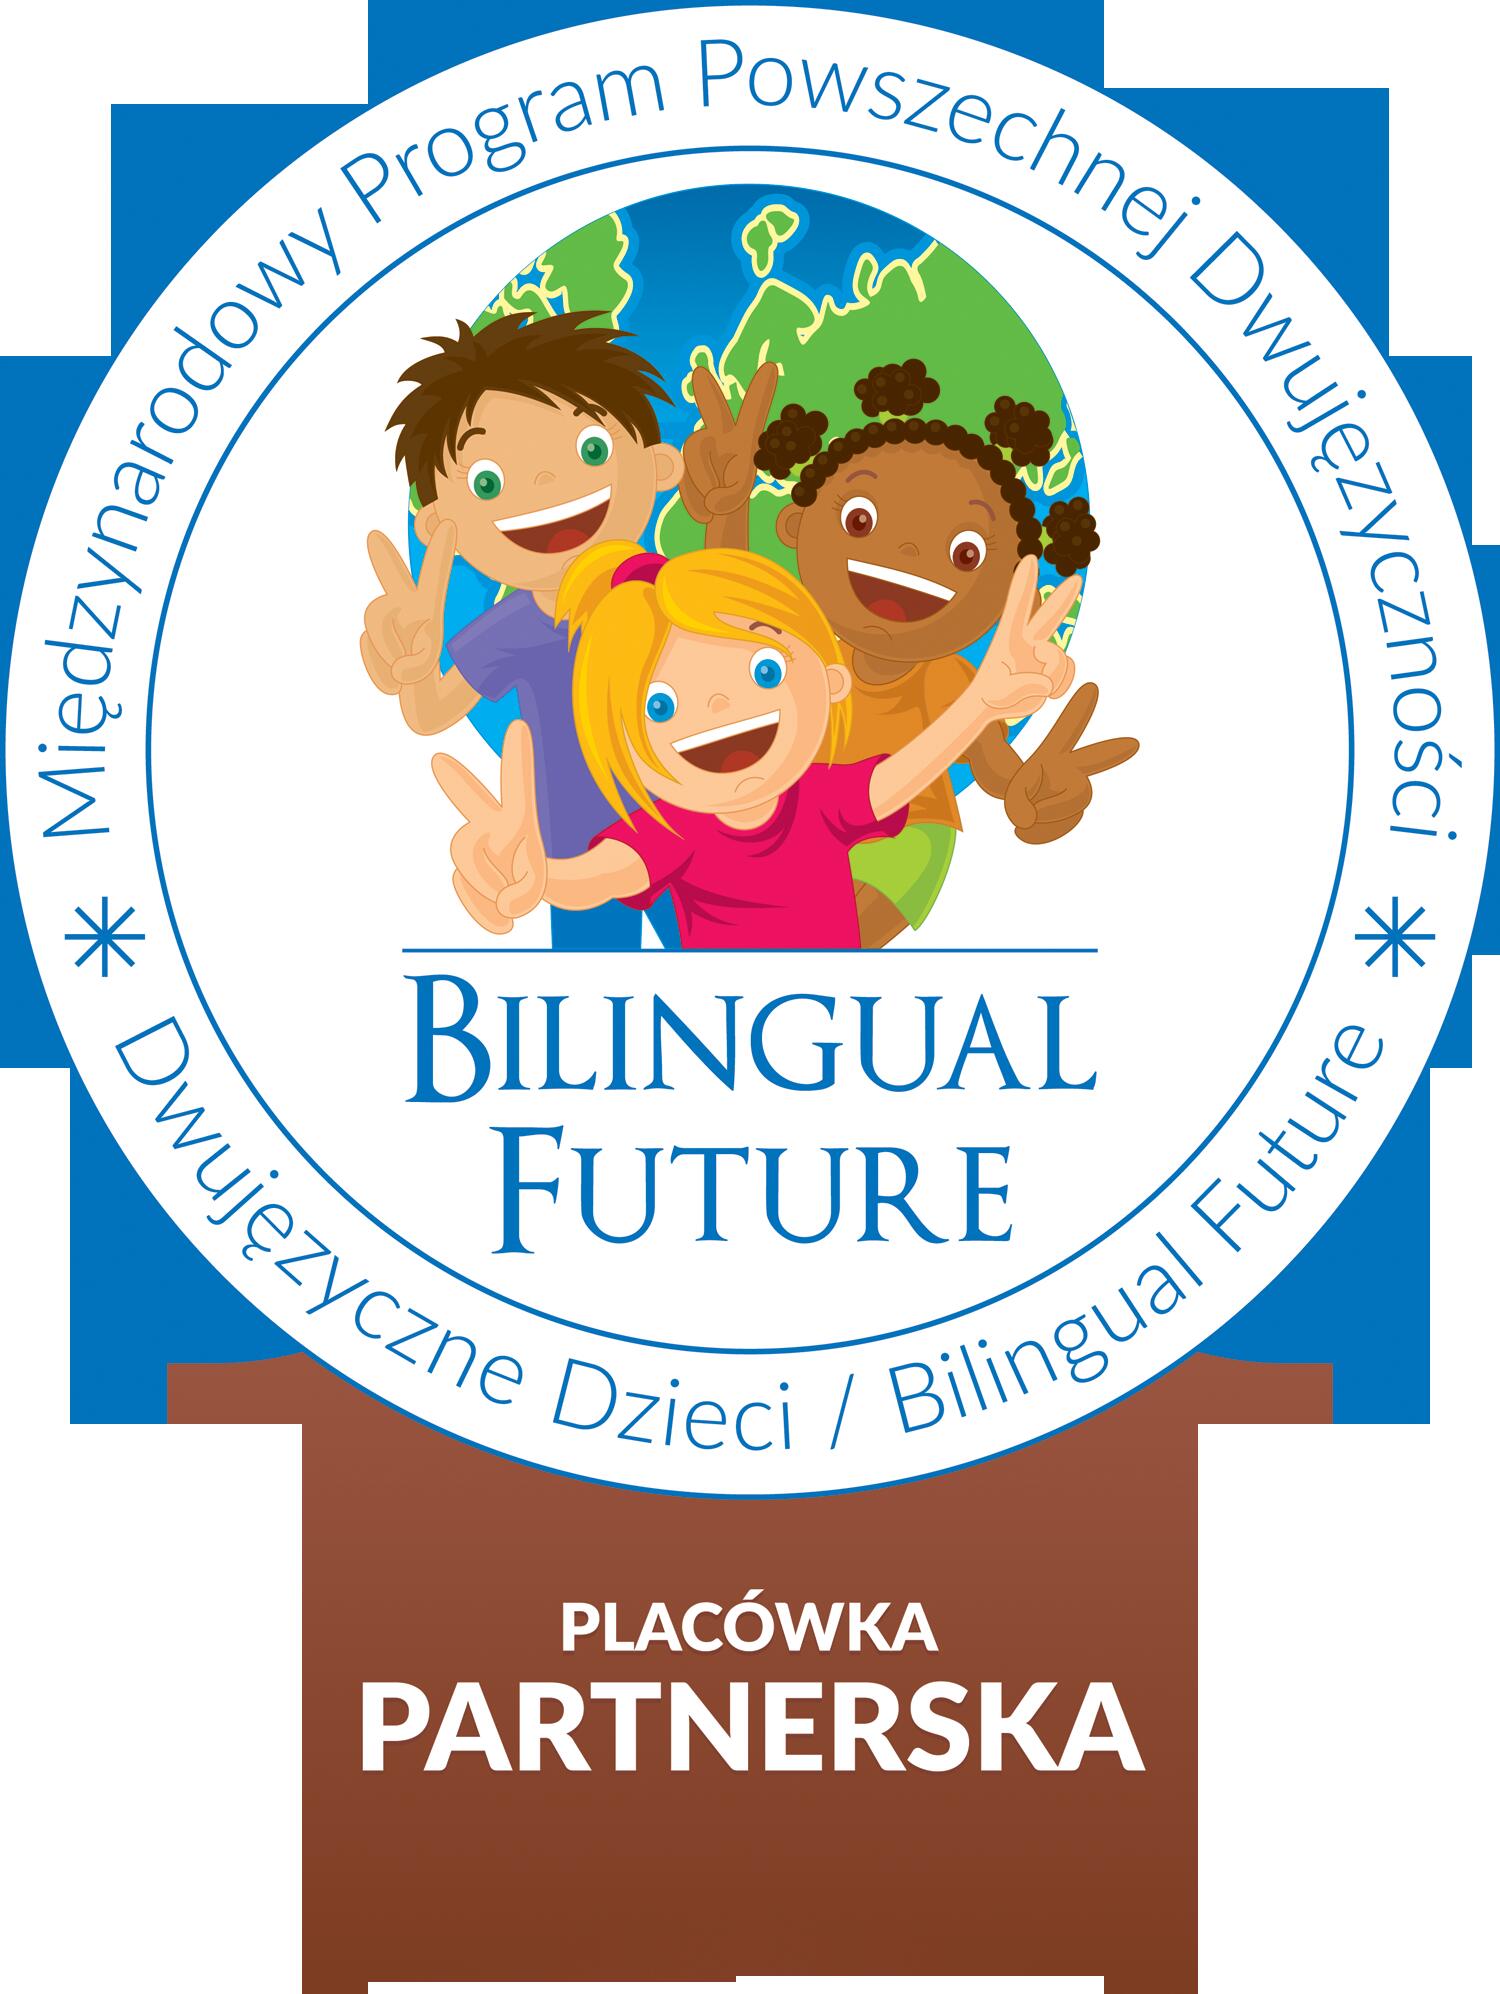 bilingual future logo placowka partnerska PL.png